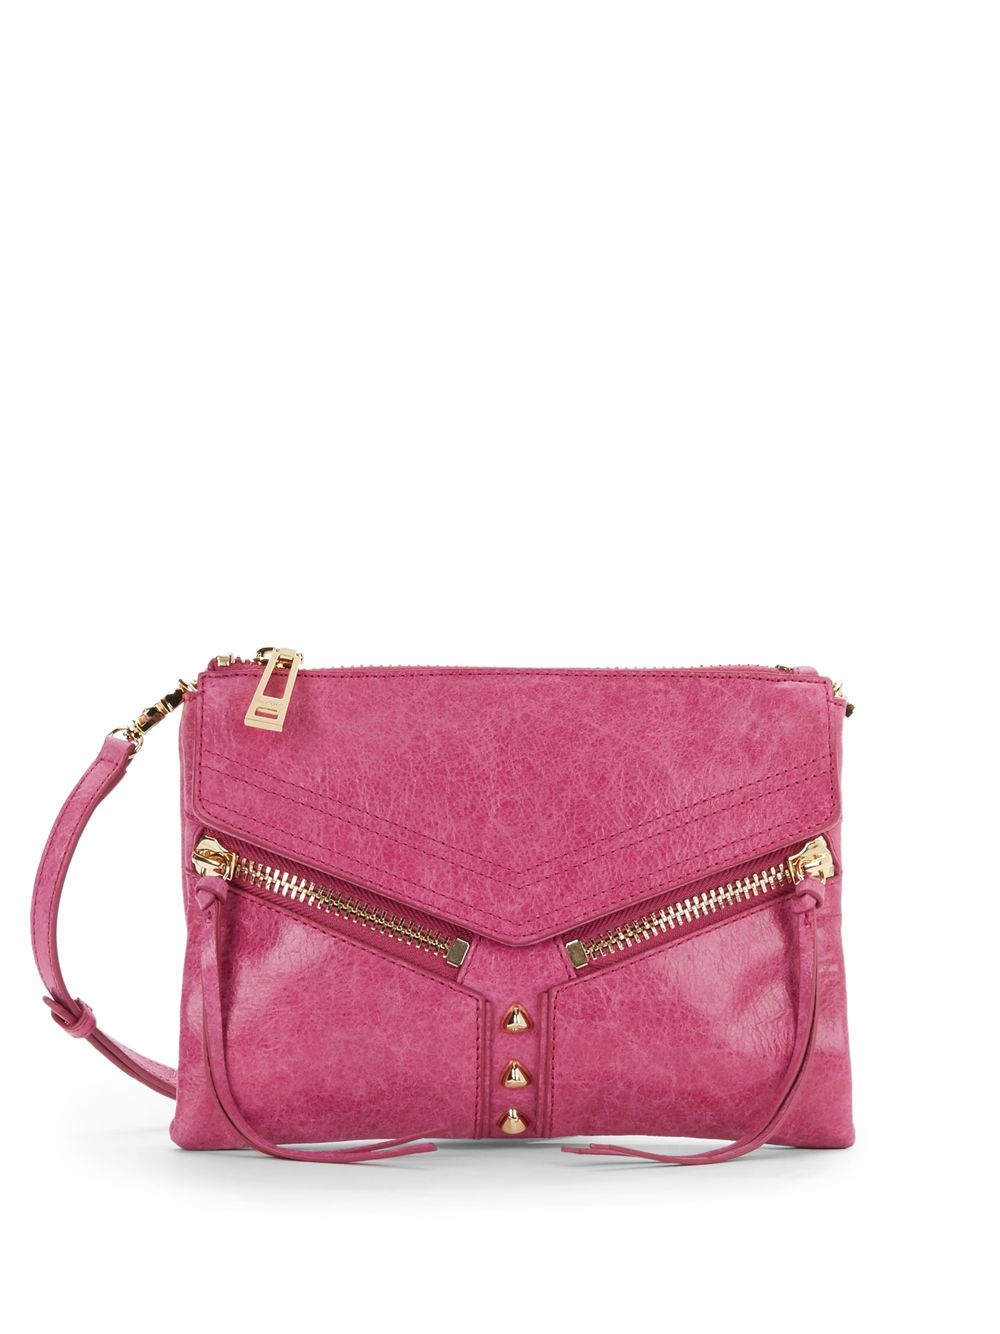 Botkier Legacy Leather Crossbody Bag in Pink (fuchsia) | Lyst